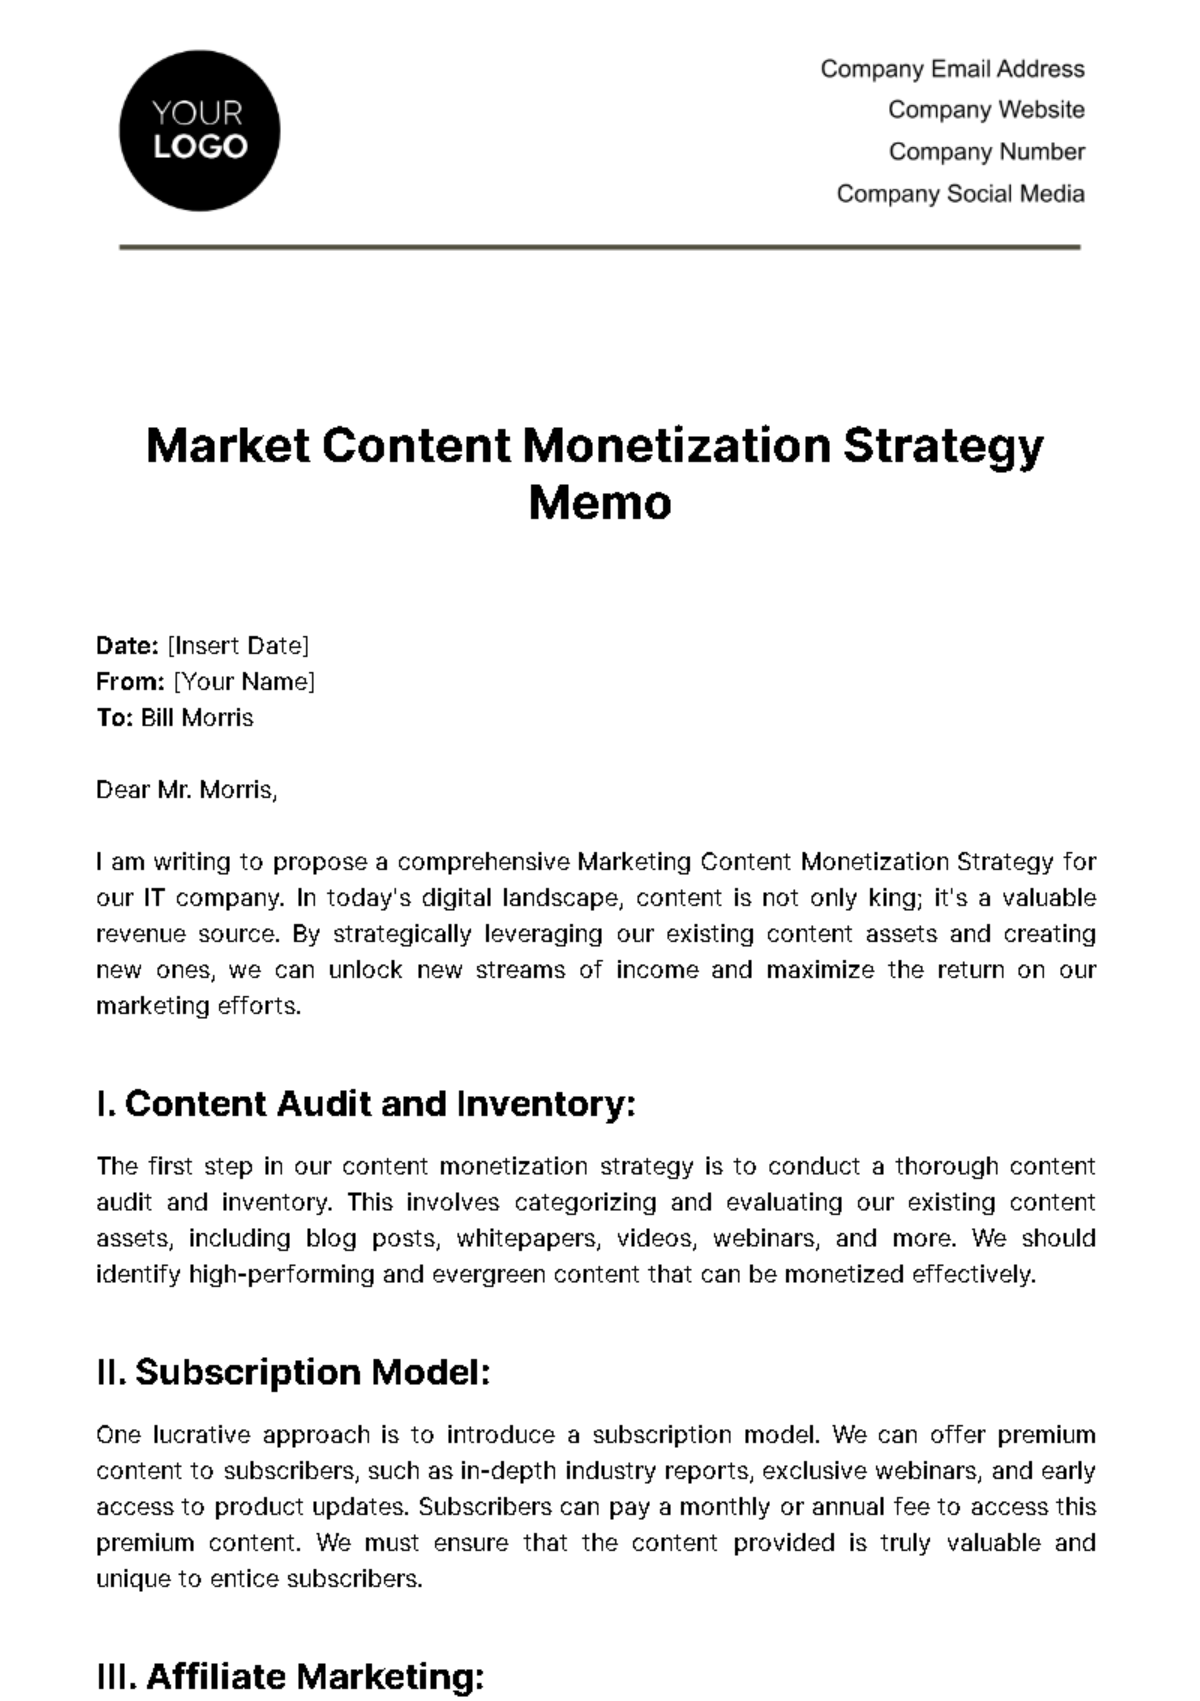 Free Marketing Content Monetization Strategy Memo Template